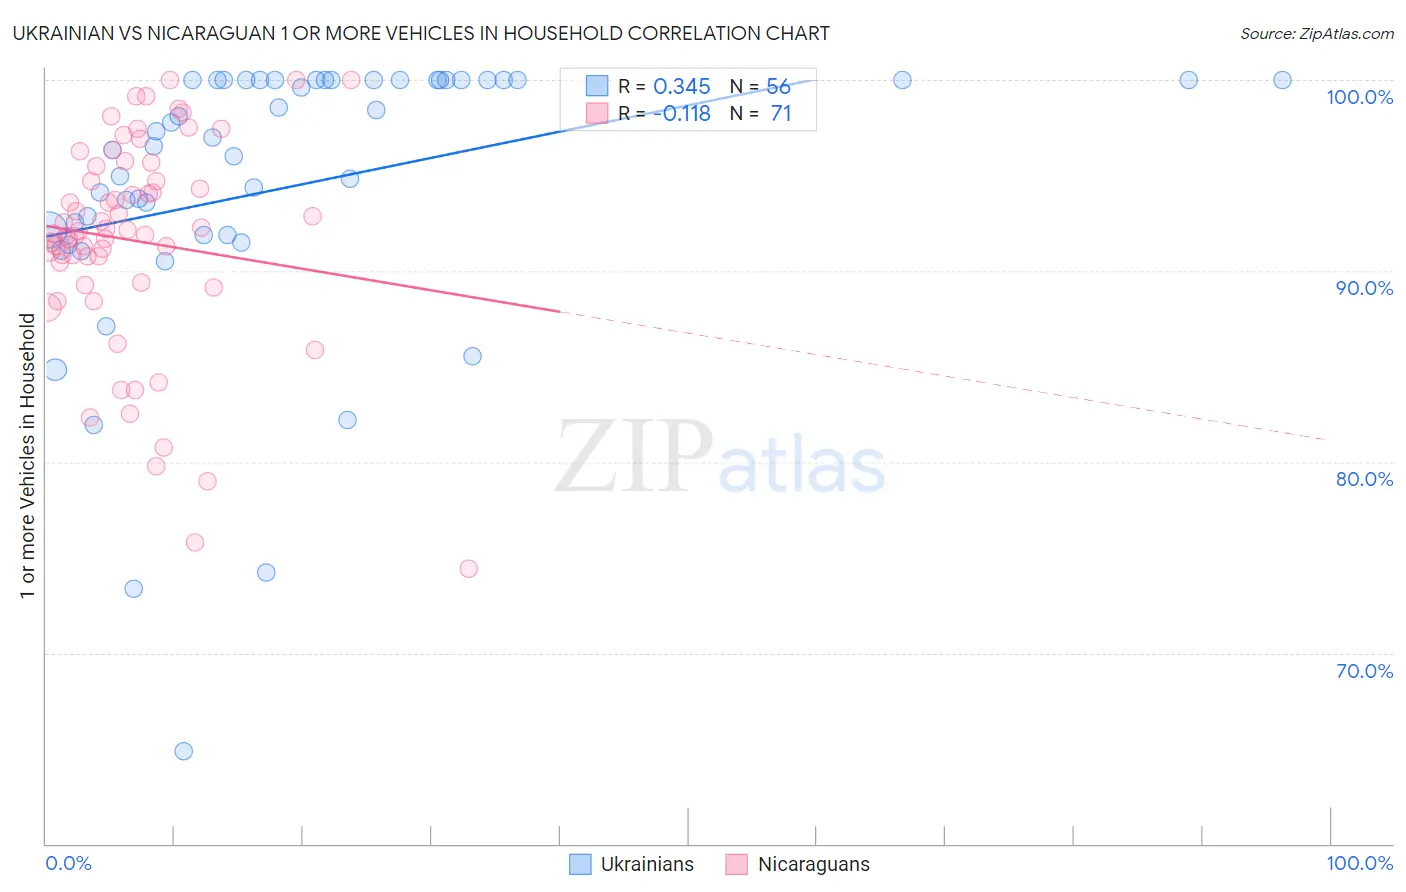 Ukrainian vs Nicaraguan 1 or more Vehicles in Household